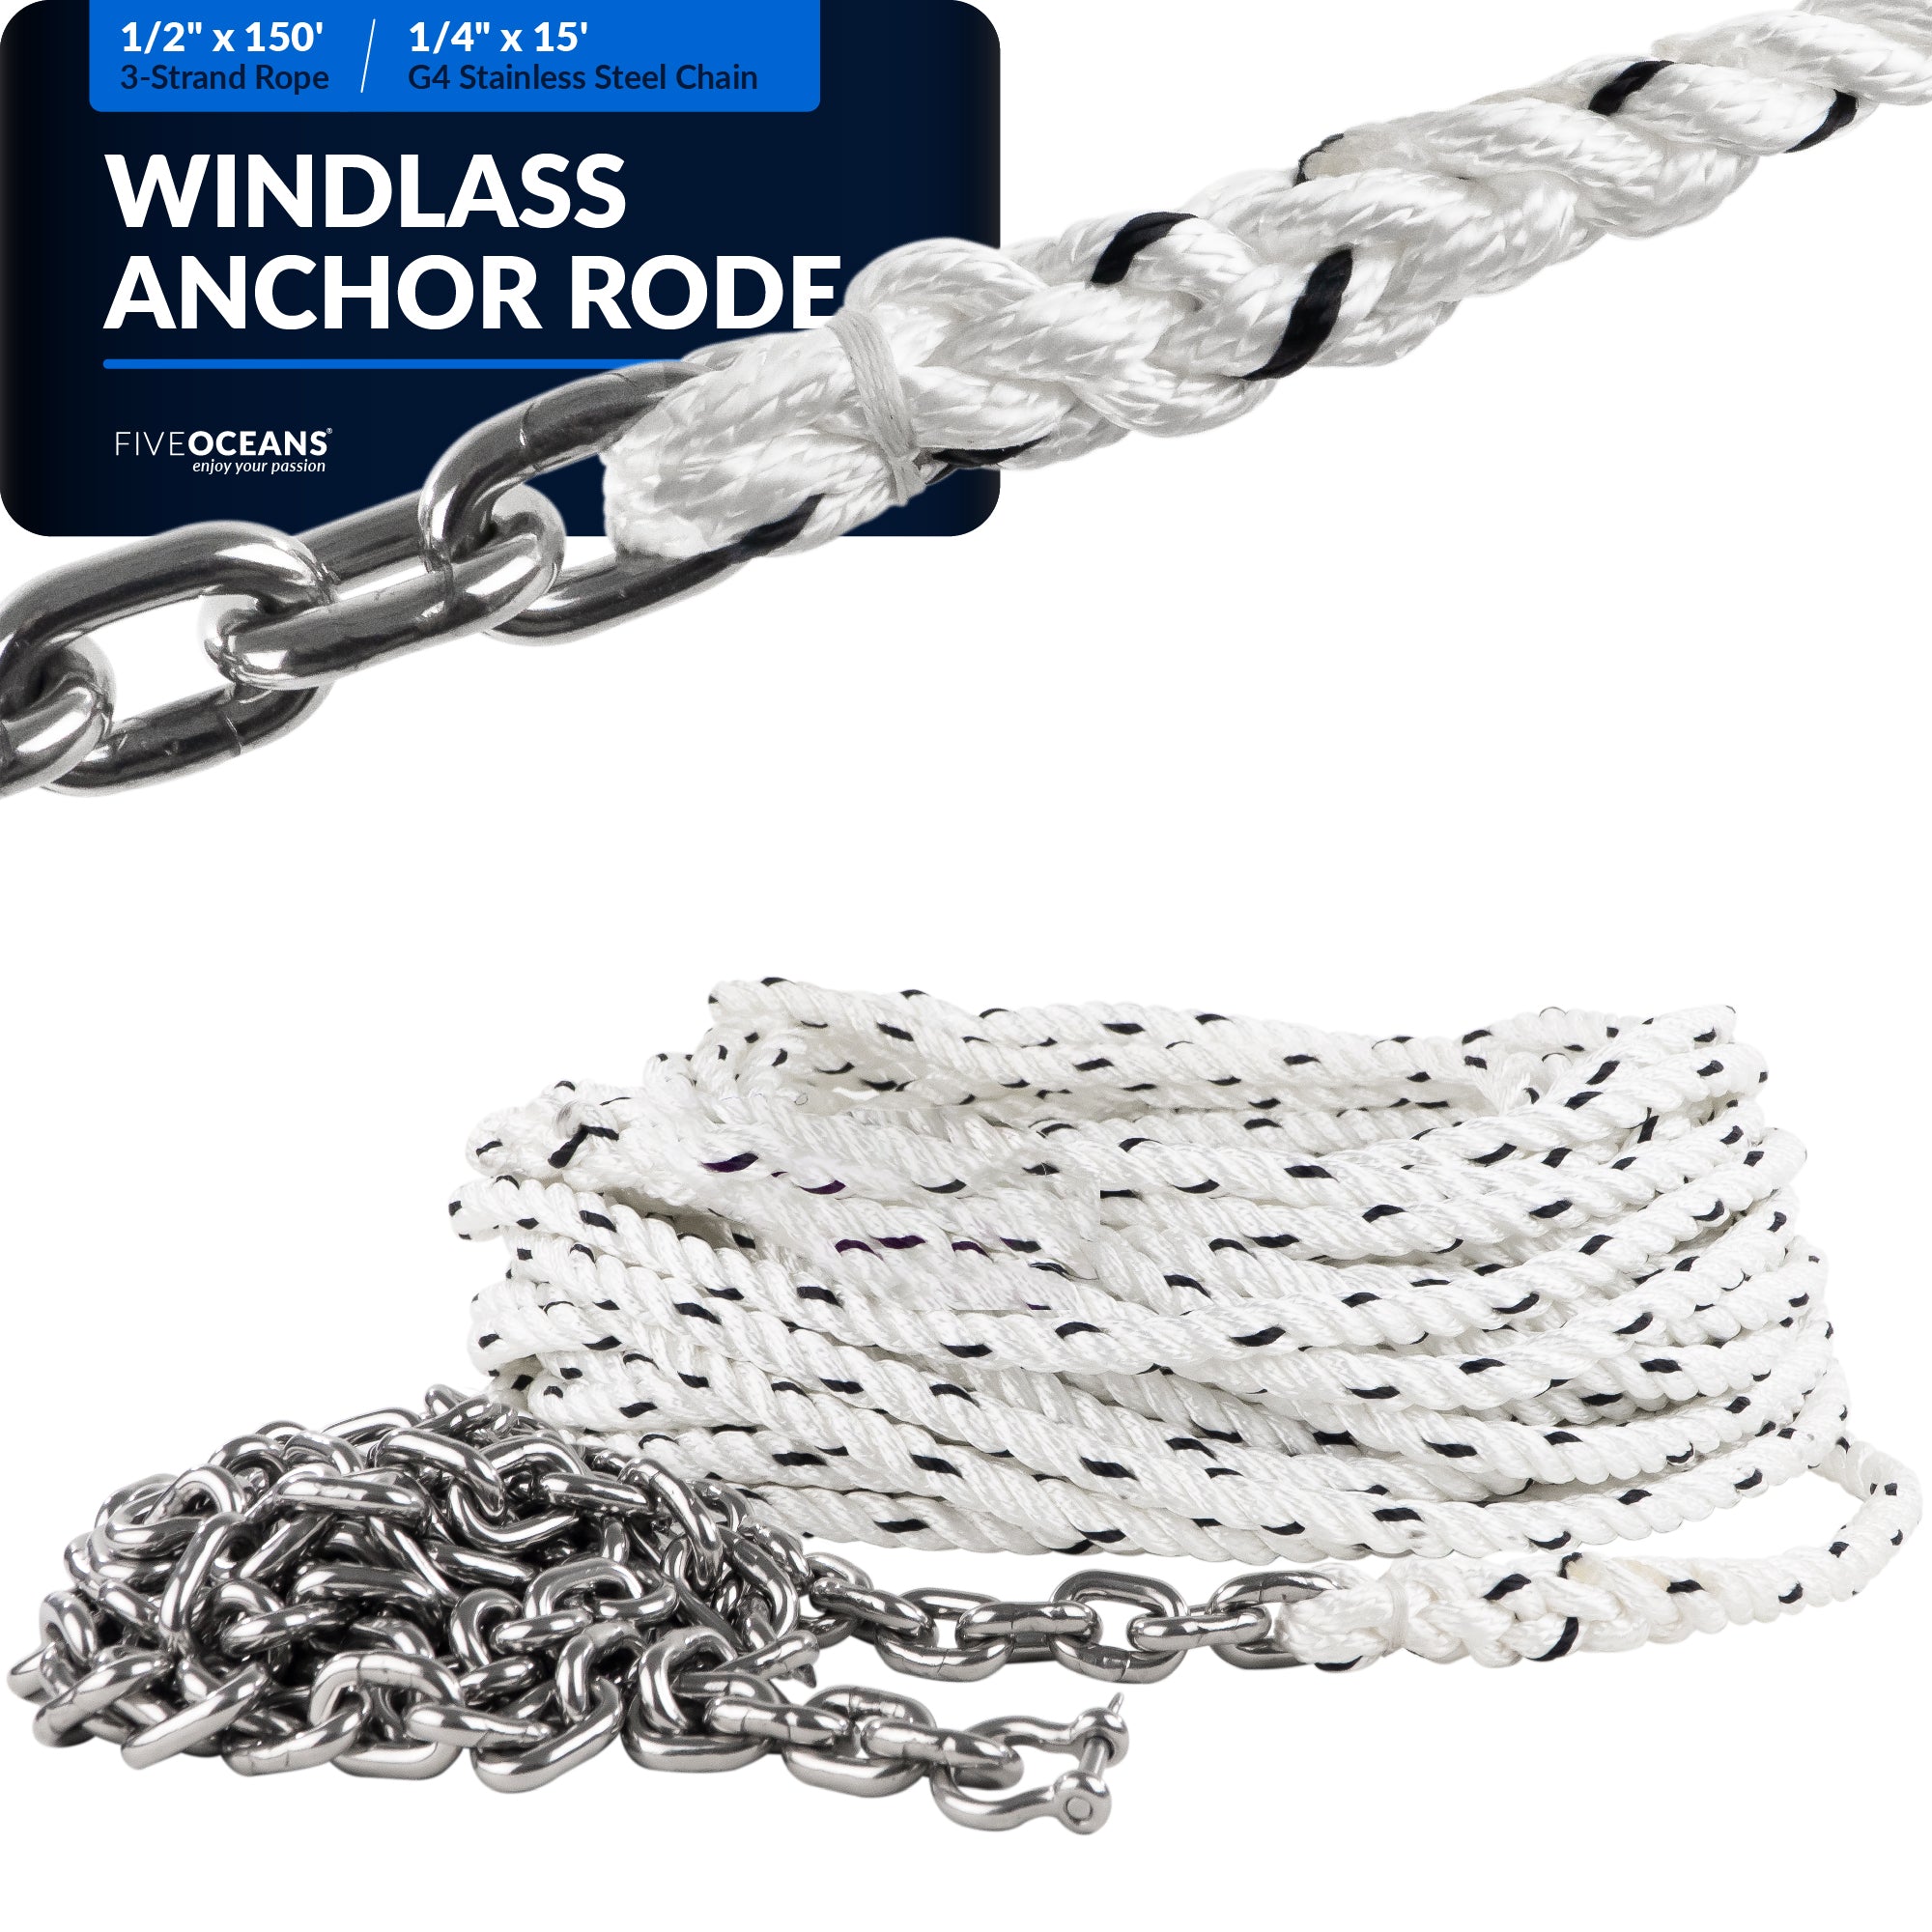 Windlass Anchor Rode, 1/2" x 150' Nylon 3-Strand Rope, 1/4 x 15' G4 Stainless Steel Chain - FO4527